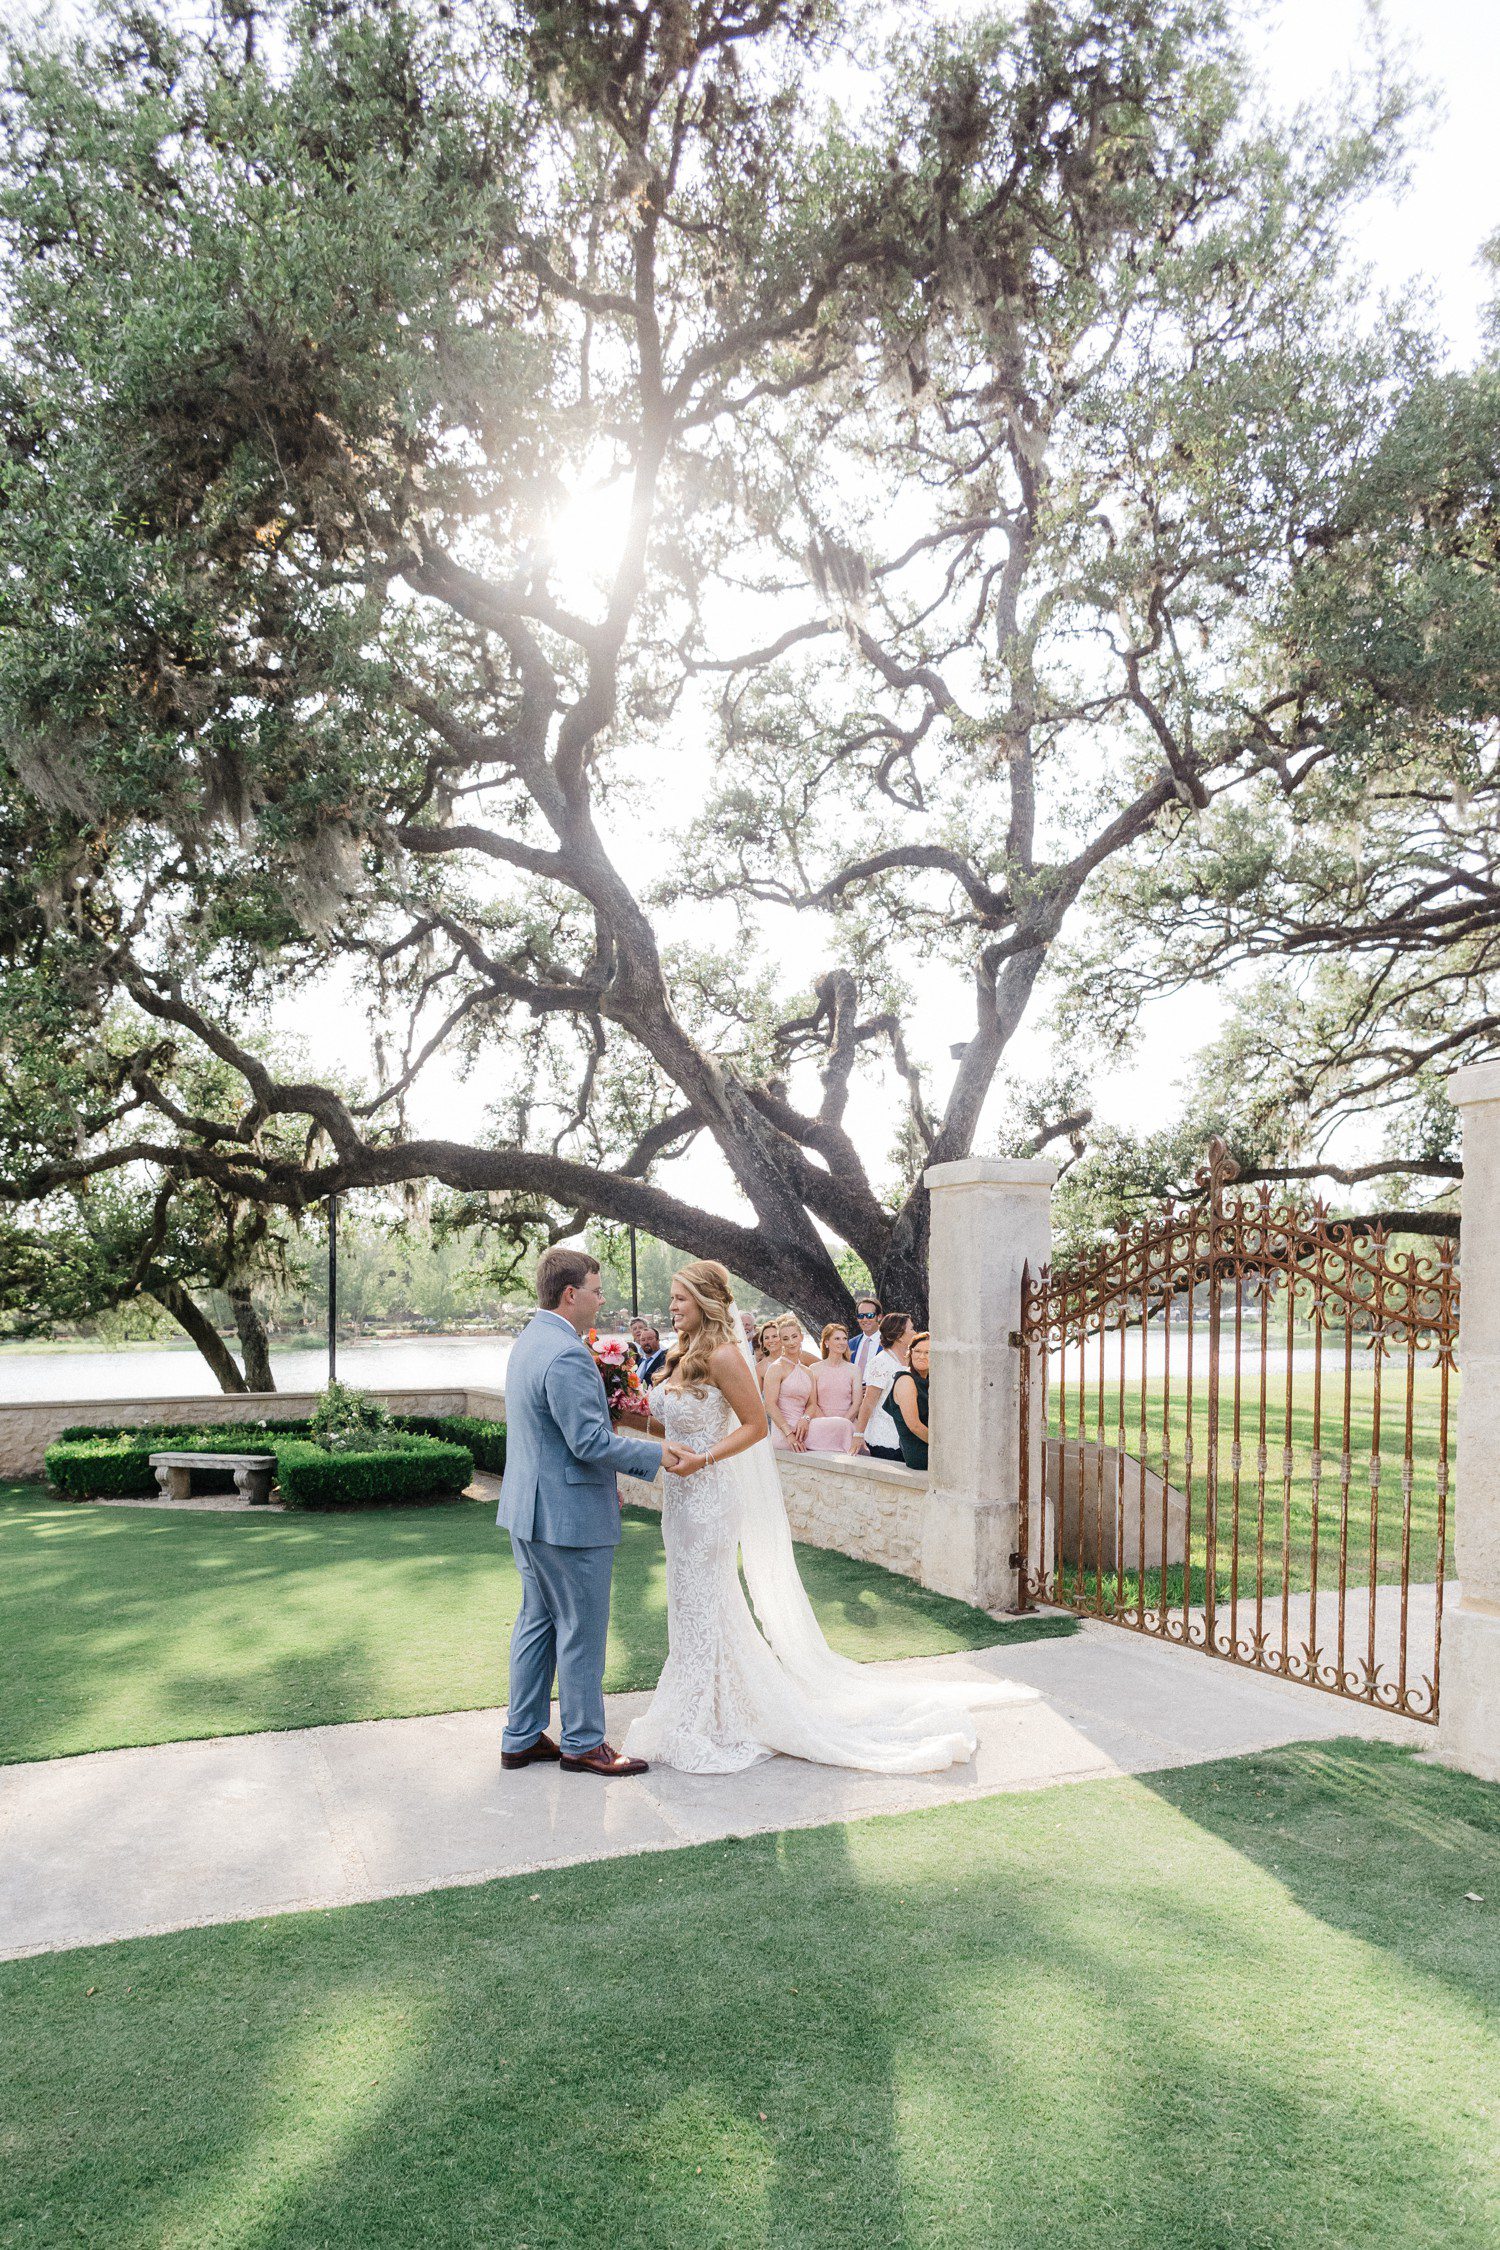 Wedding first look at Houston Oaks. 